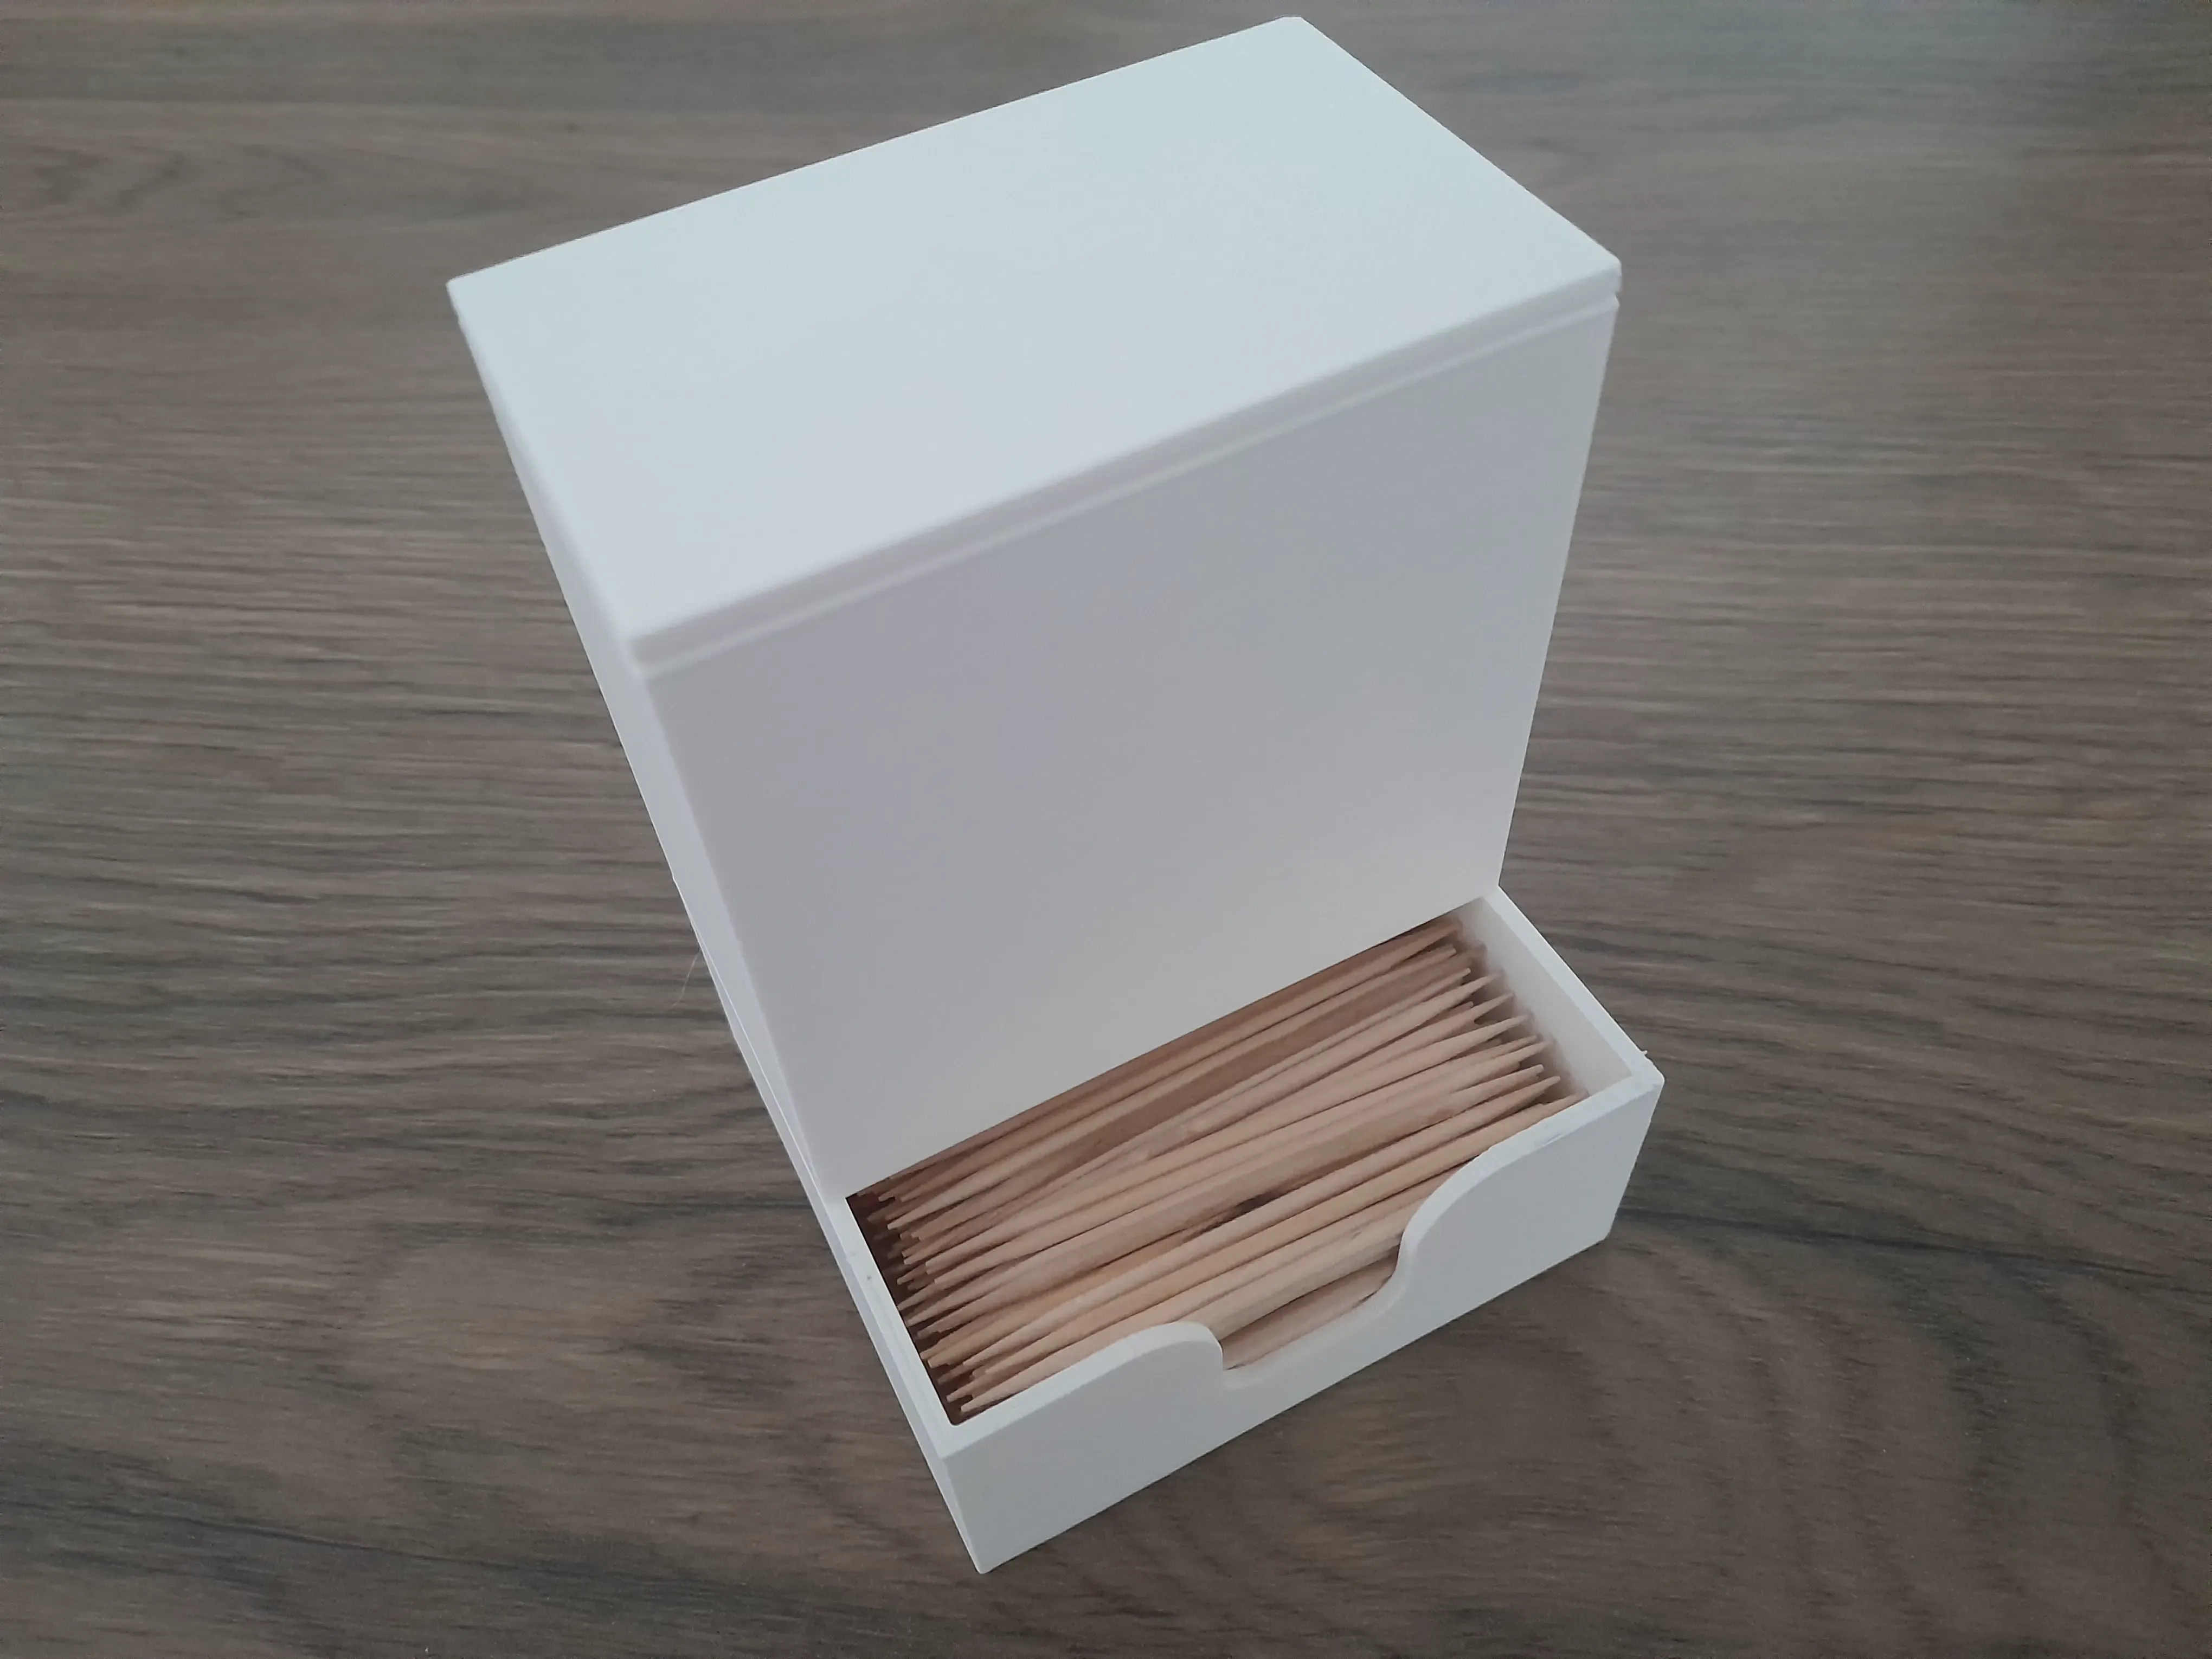 Toothpick box